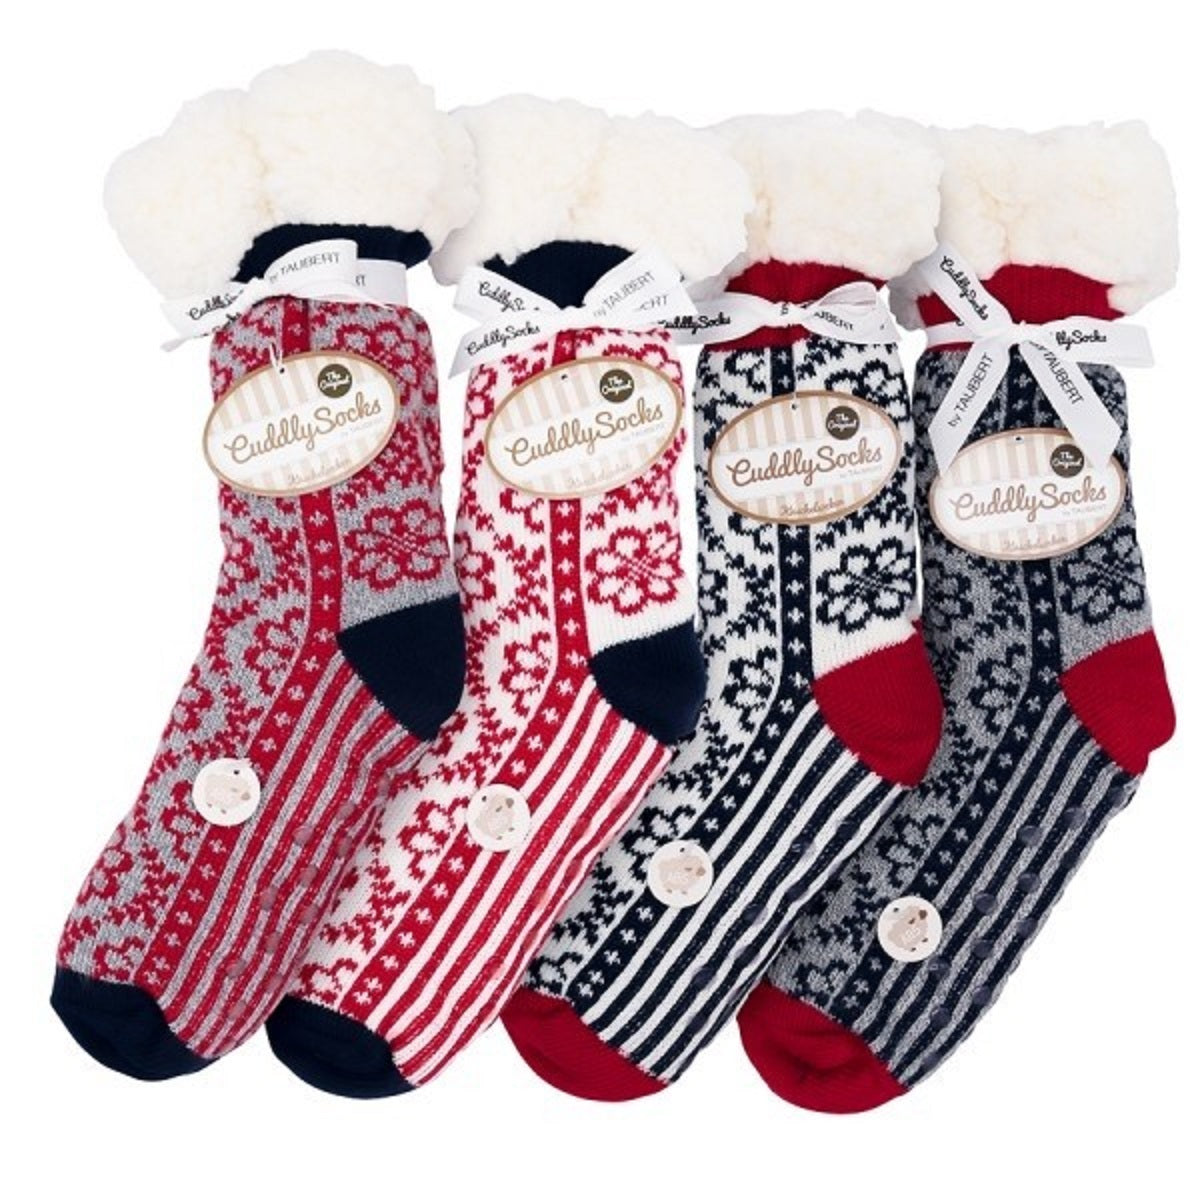 Ladies Soft Warm Fluffy Fleece Lined Slipper Socks - Grey & Red Scandi Floral